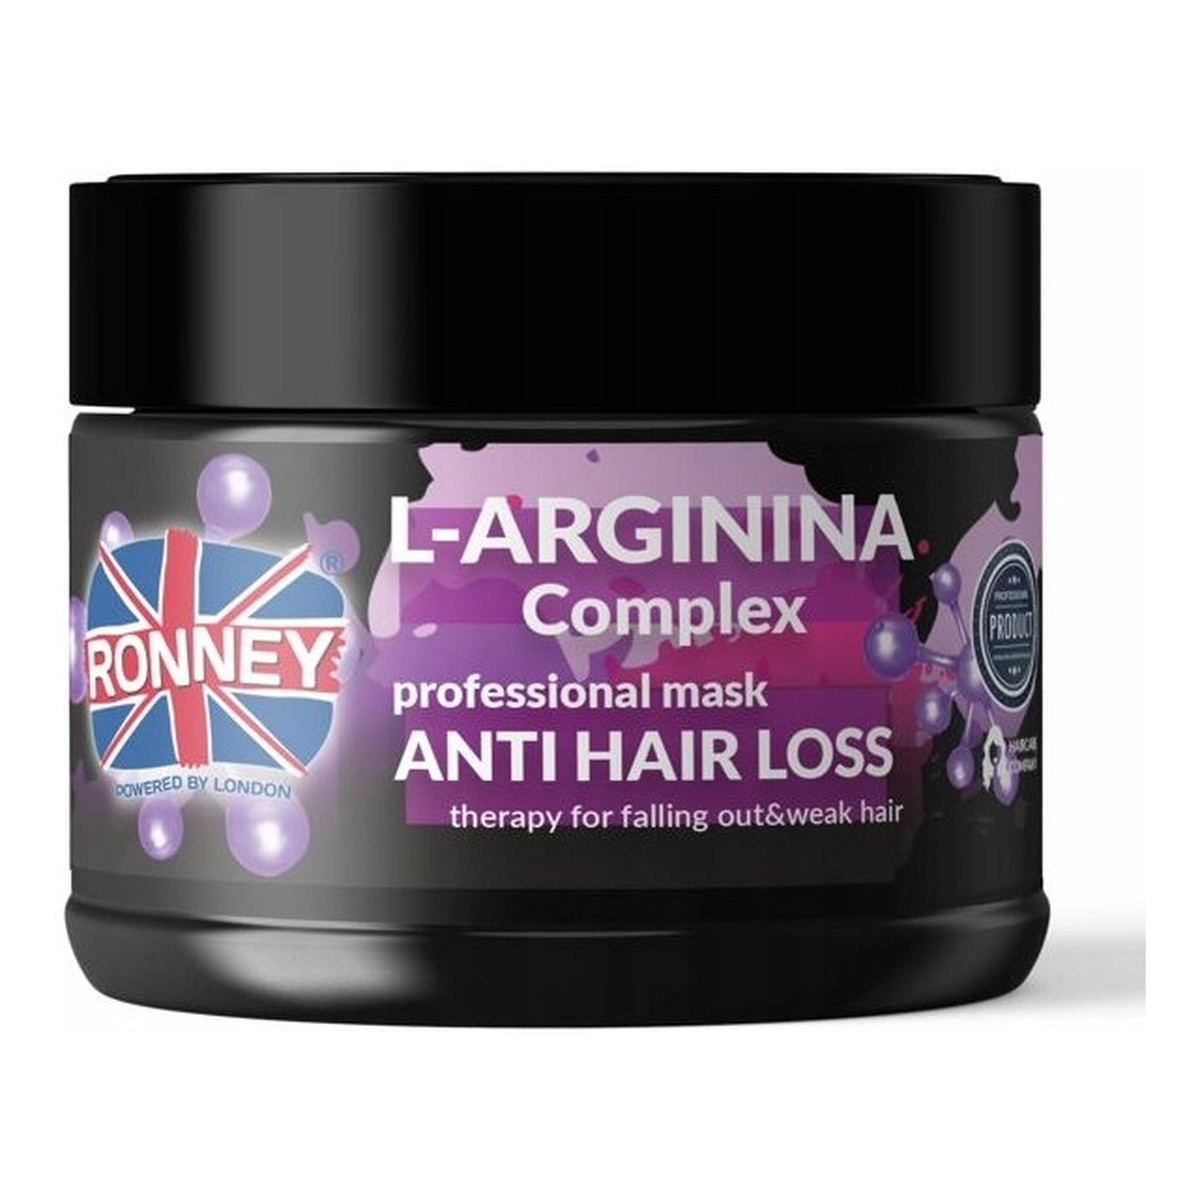 Ronney L-Arginina Complex Professional Mask Anti Hair Loss Therapy For Falling Out & Thin Hair maska przeciw wypadaniu włosów z L-argininą 300ml